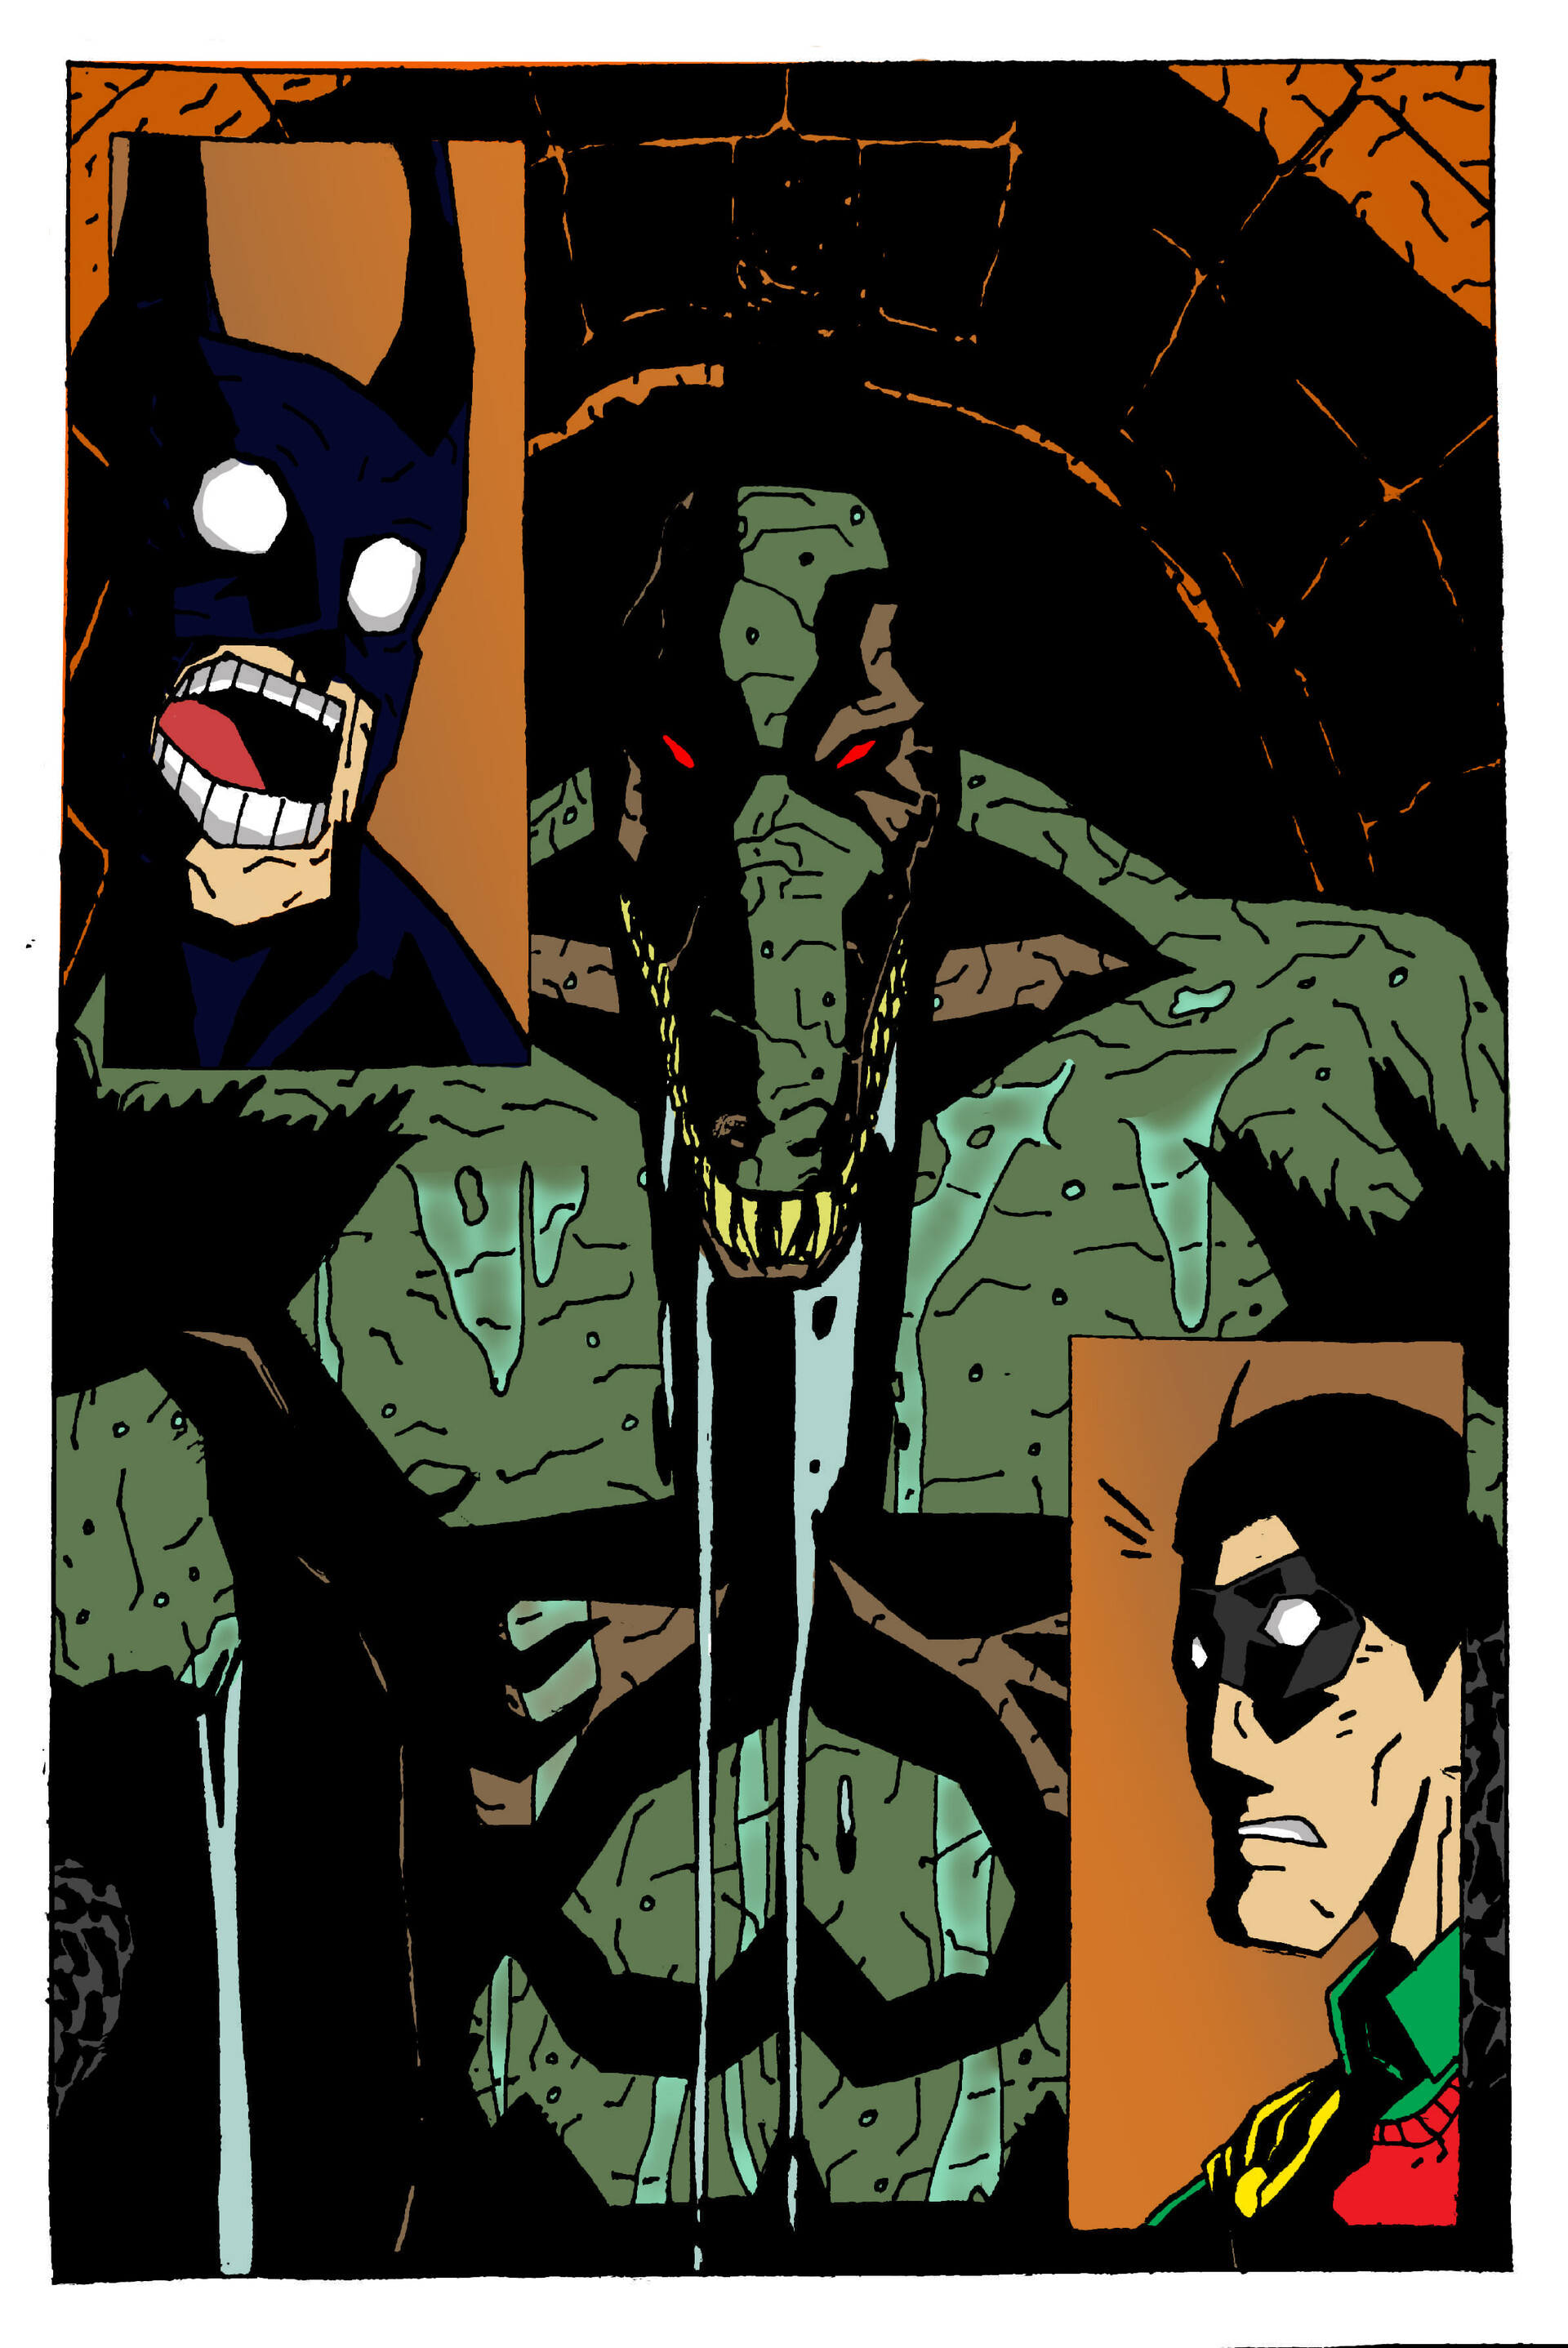 Diego Freitas - Mike Mignola inspired panel of batman and robin finding  killer croc